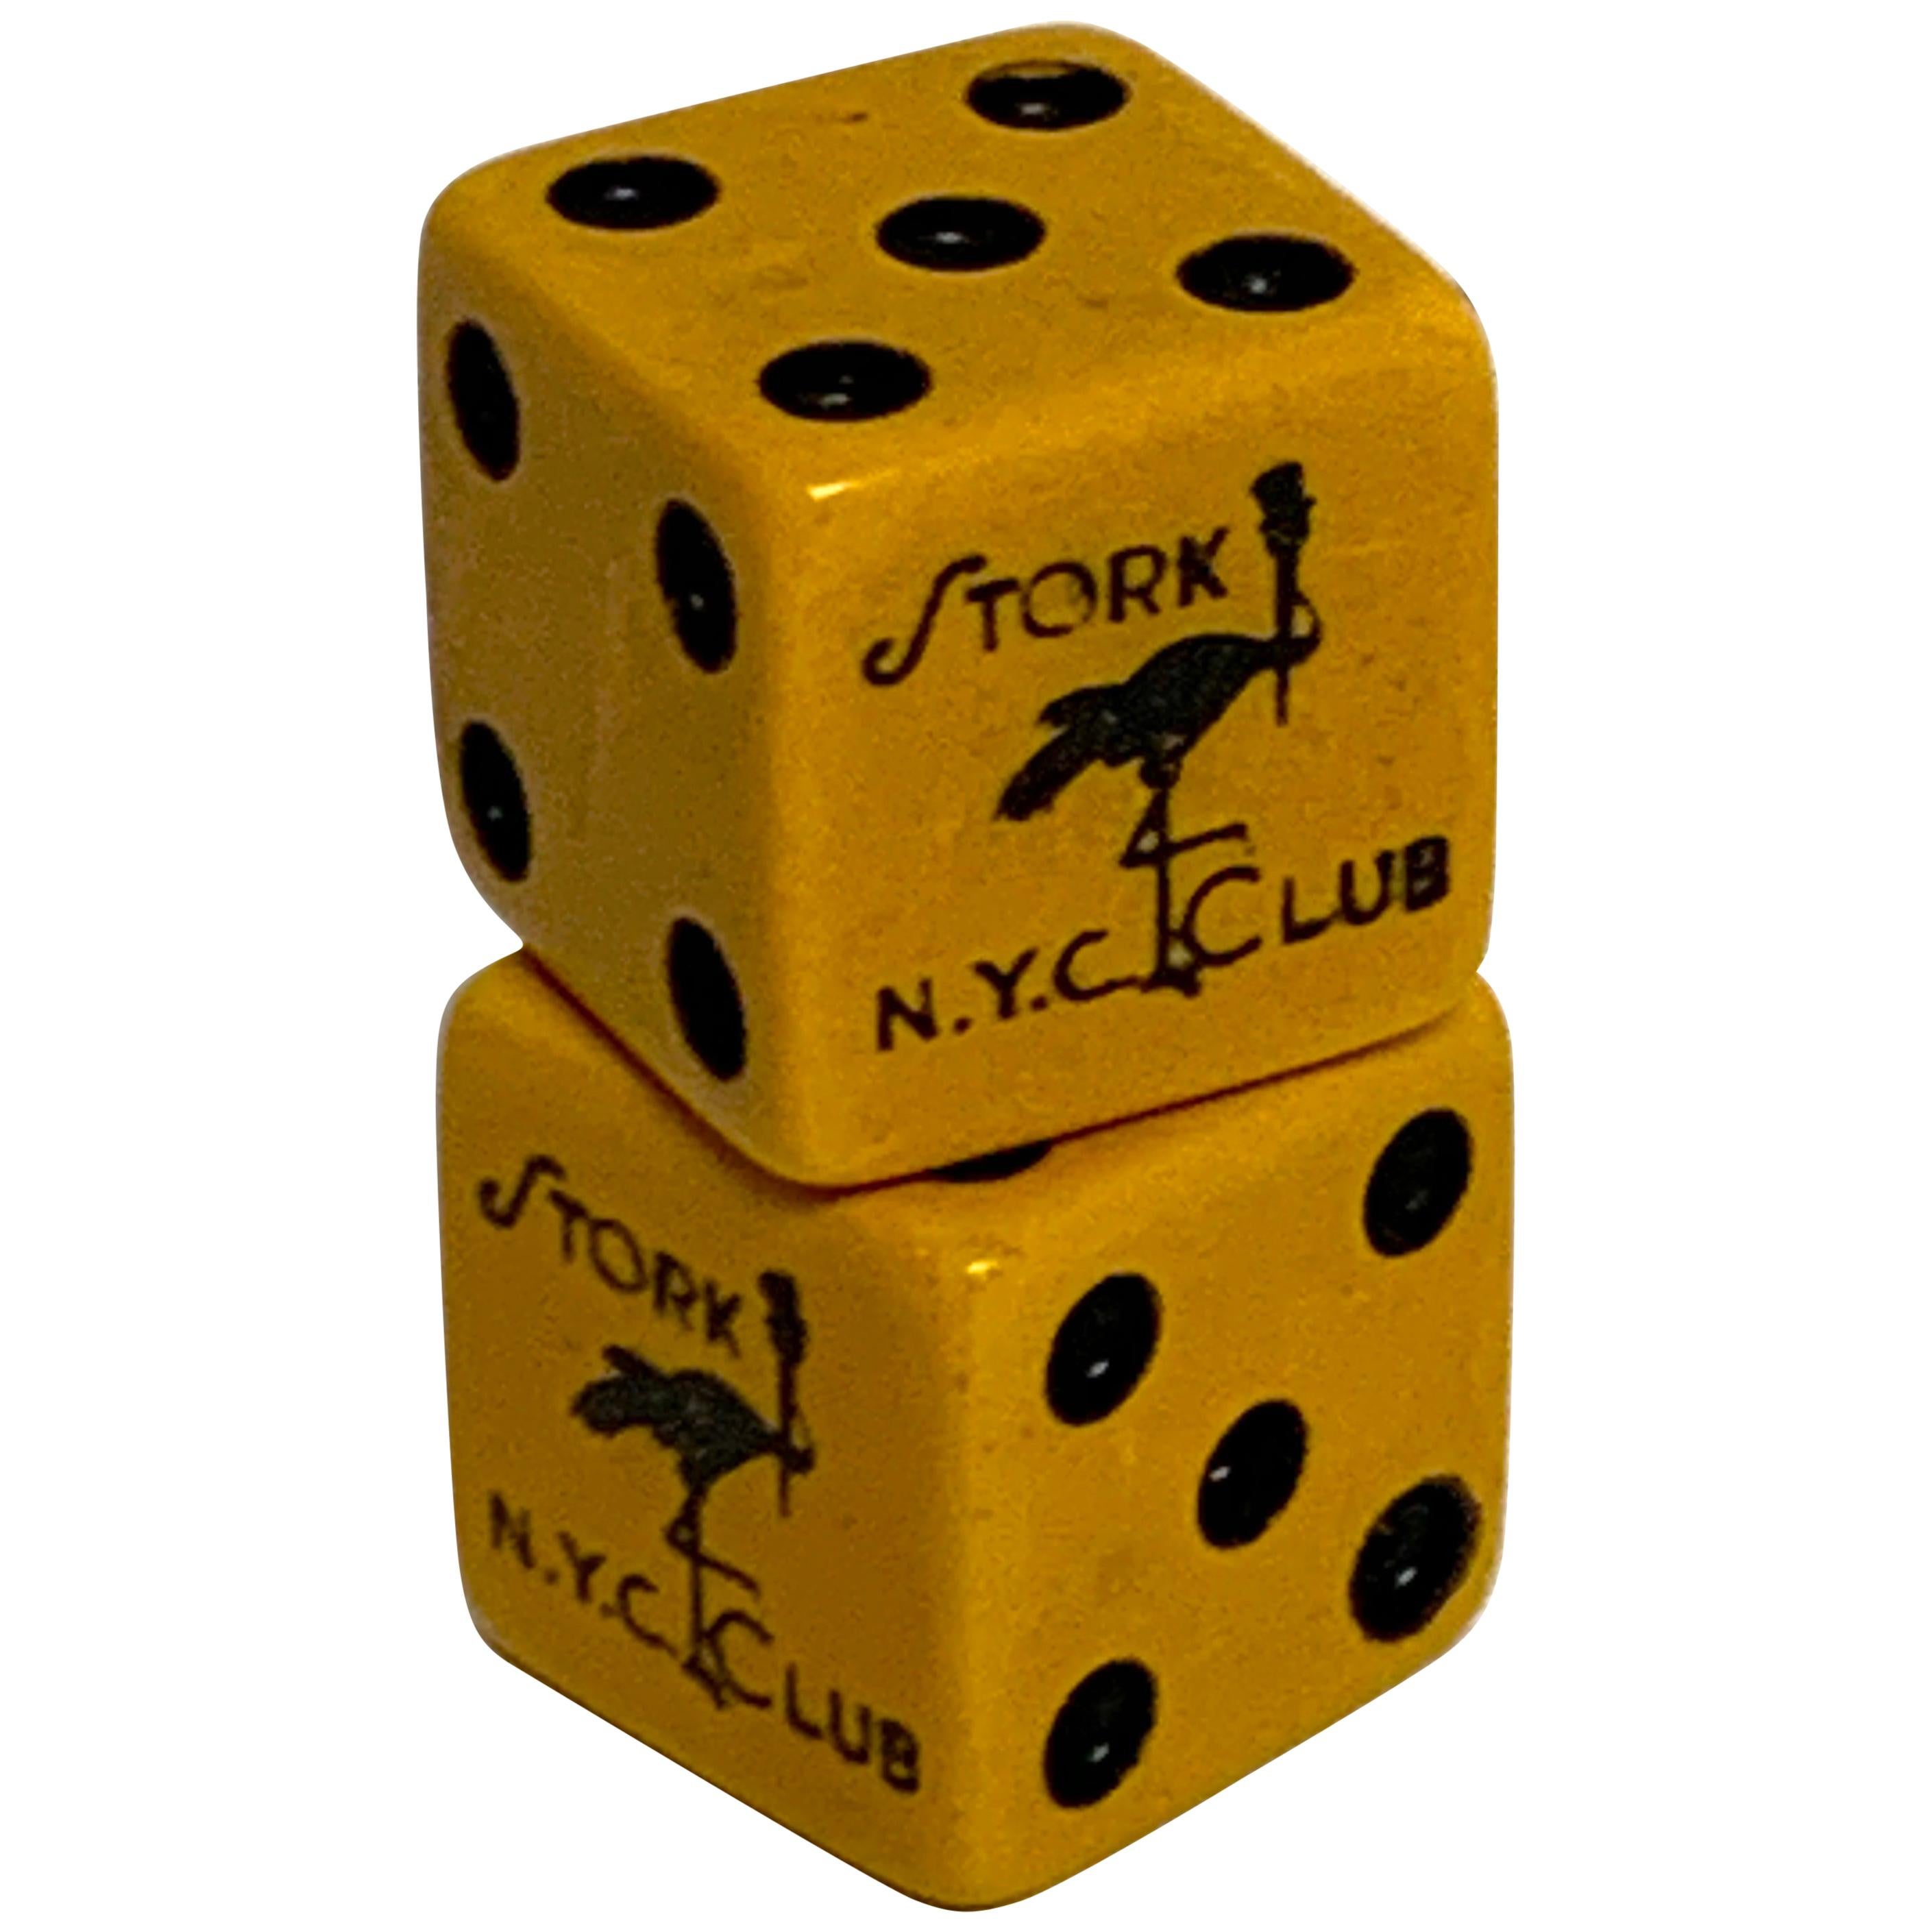 Pair of Stork Club NYC Bakelite Dice, Gambled with by Eva Gabor